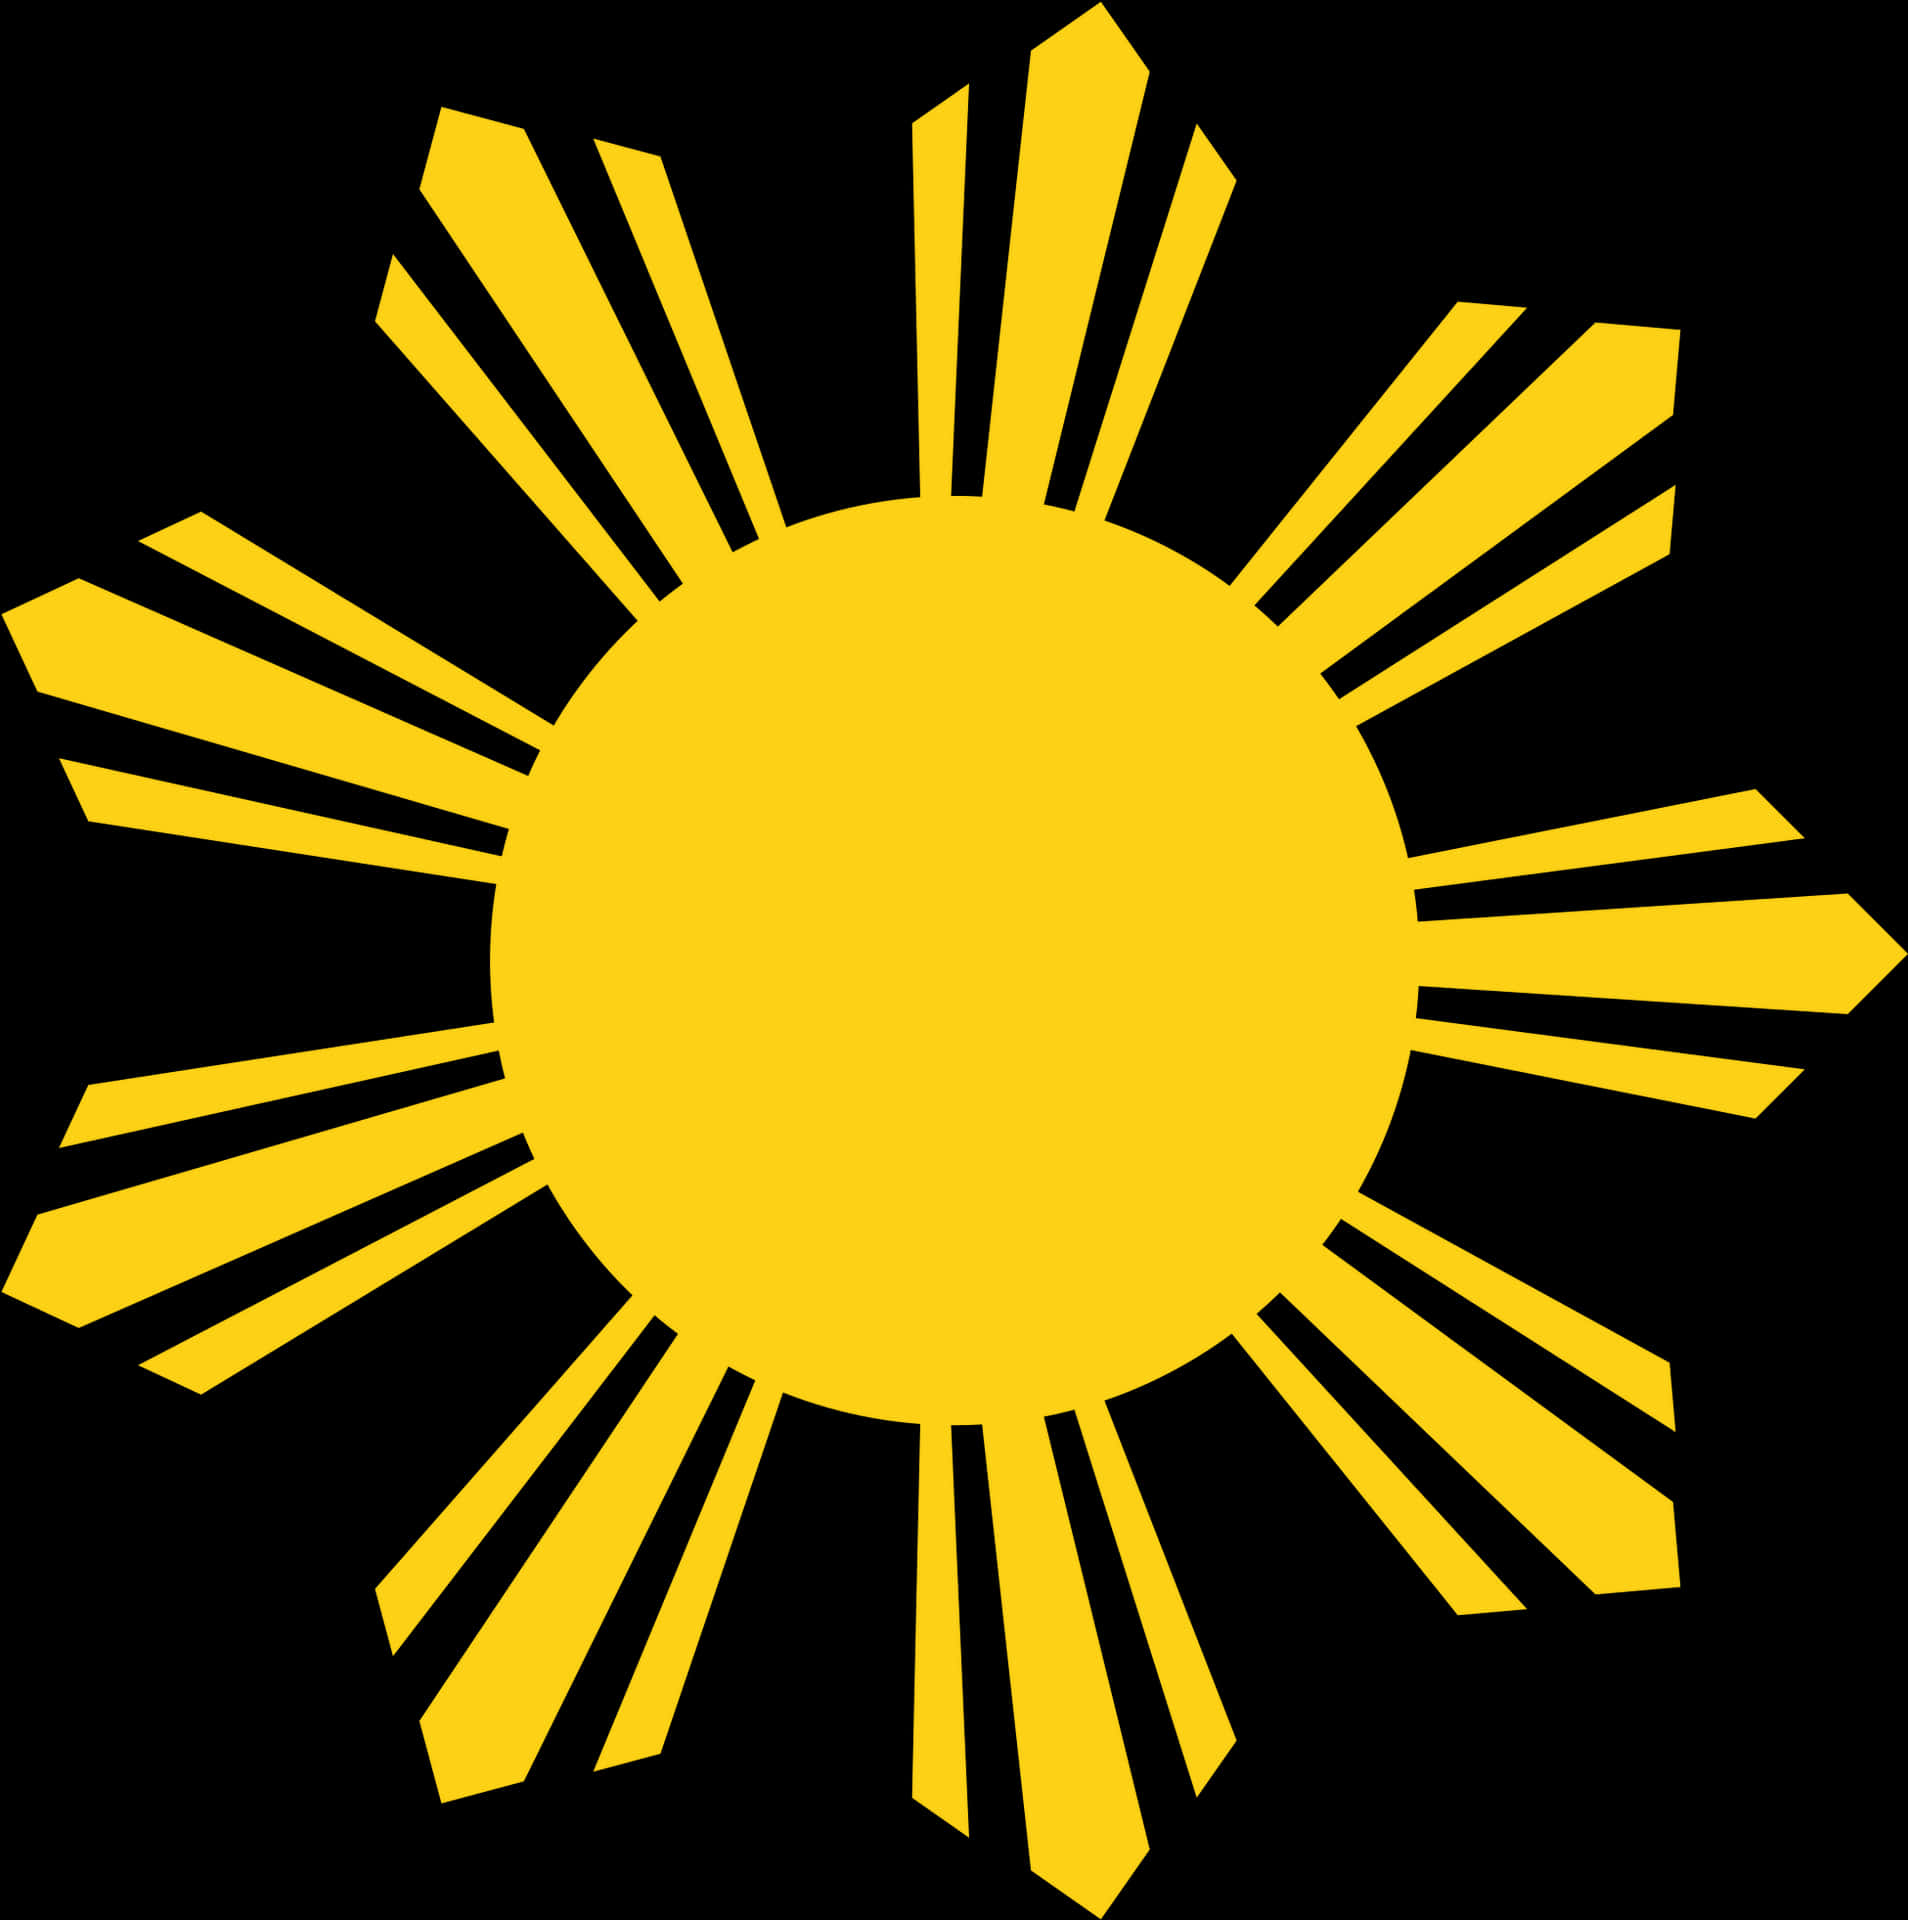 Stylized Yellow Sun Graphic PNG image